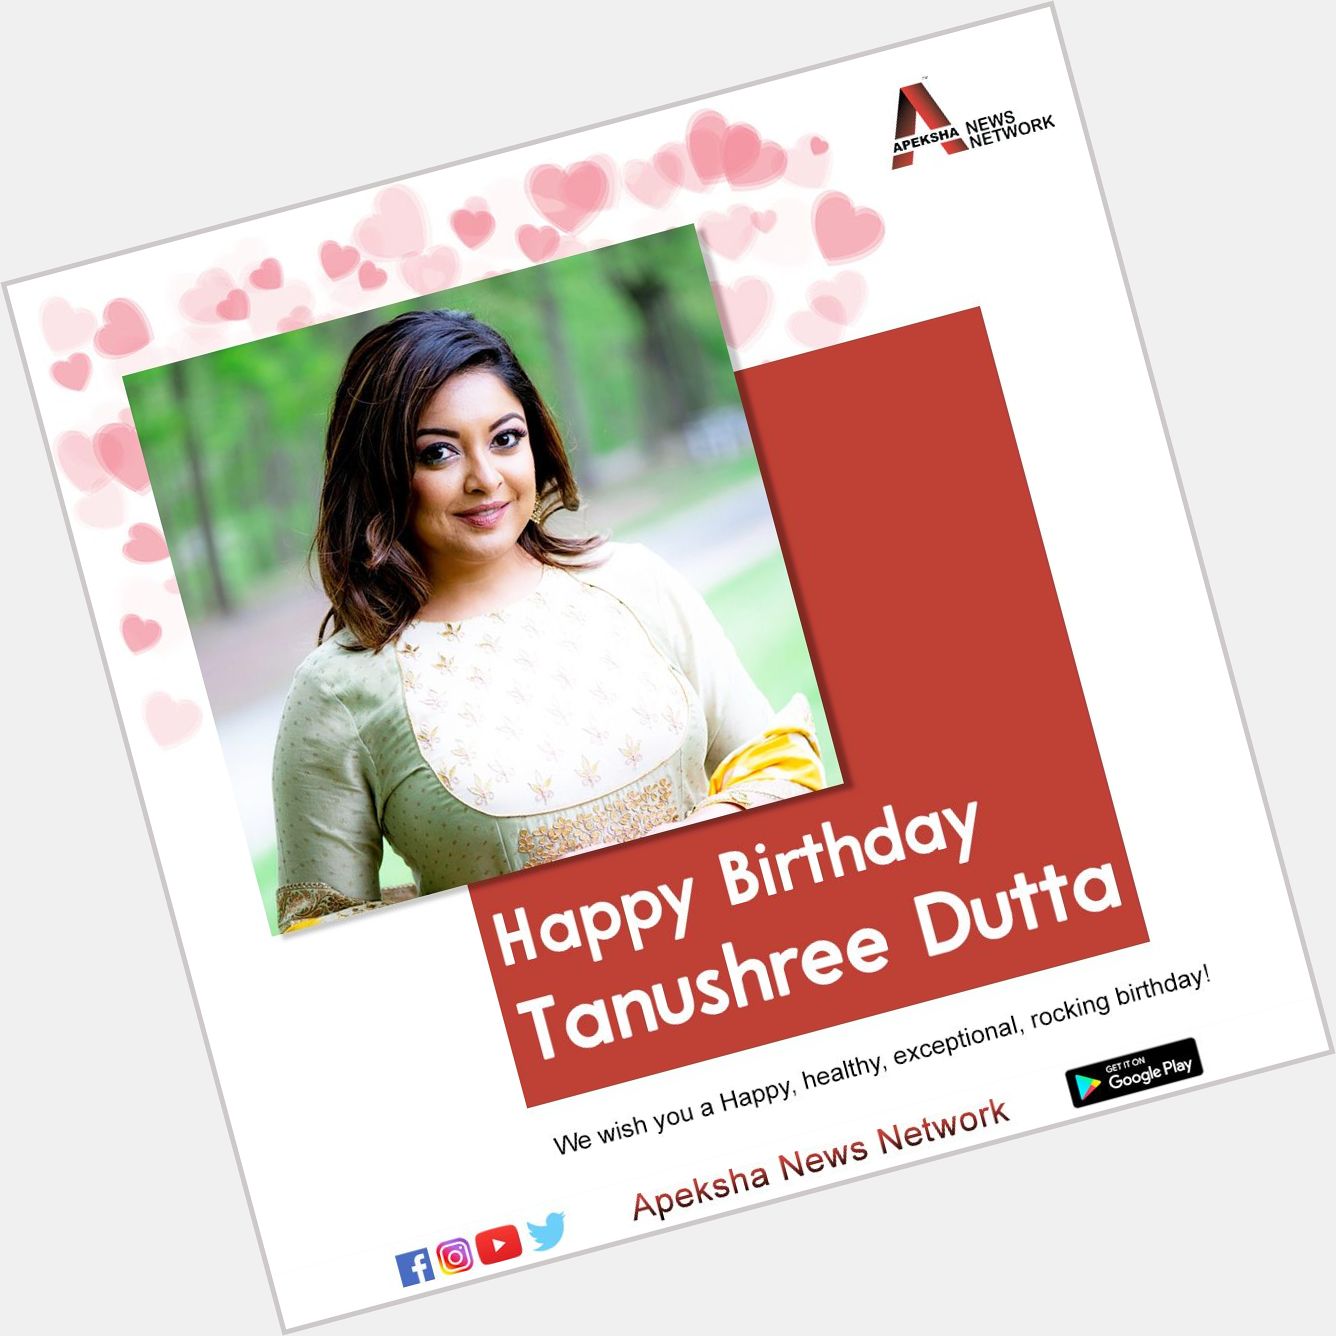 Wishing the actress Tanushree Dutta a very Happy Birthday.  